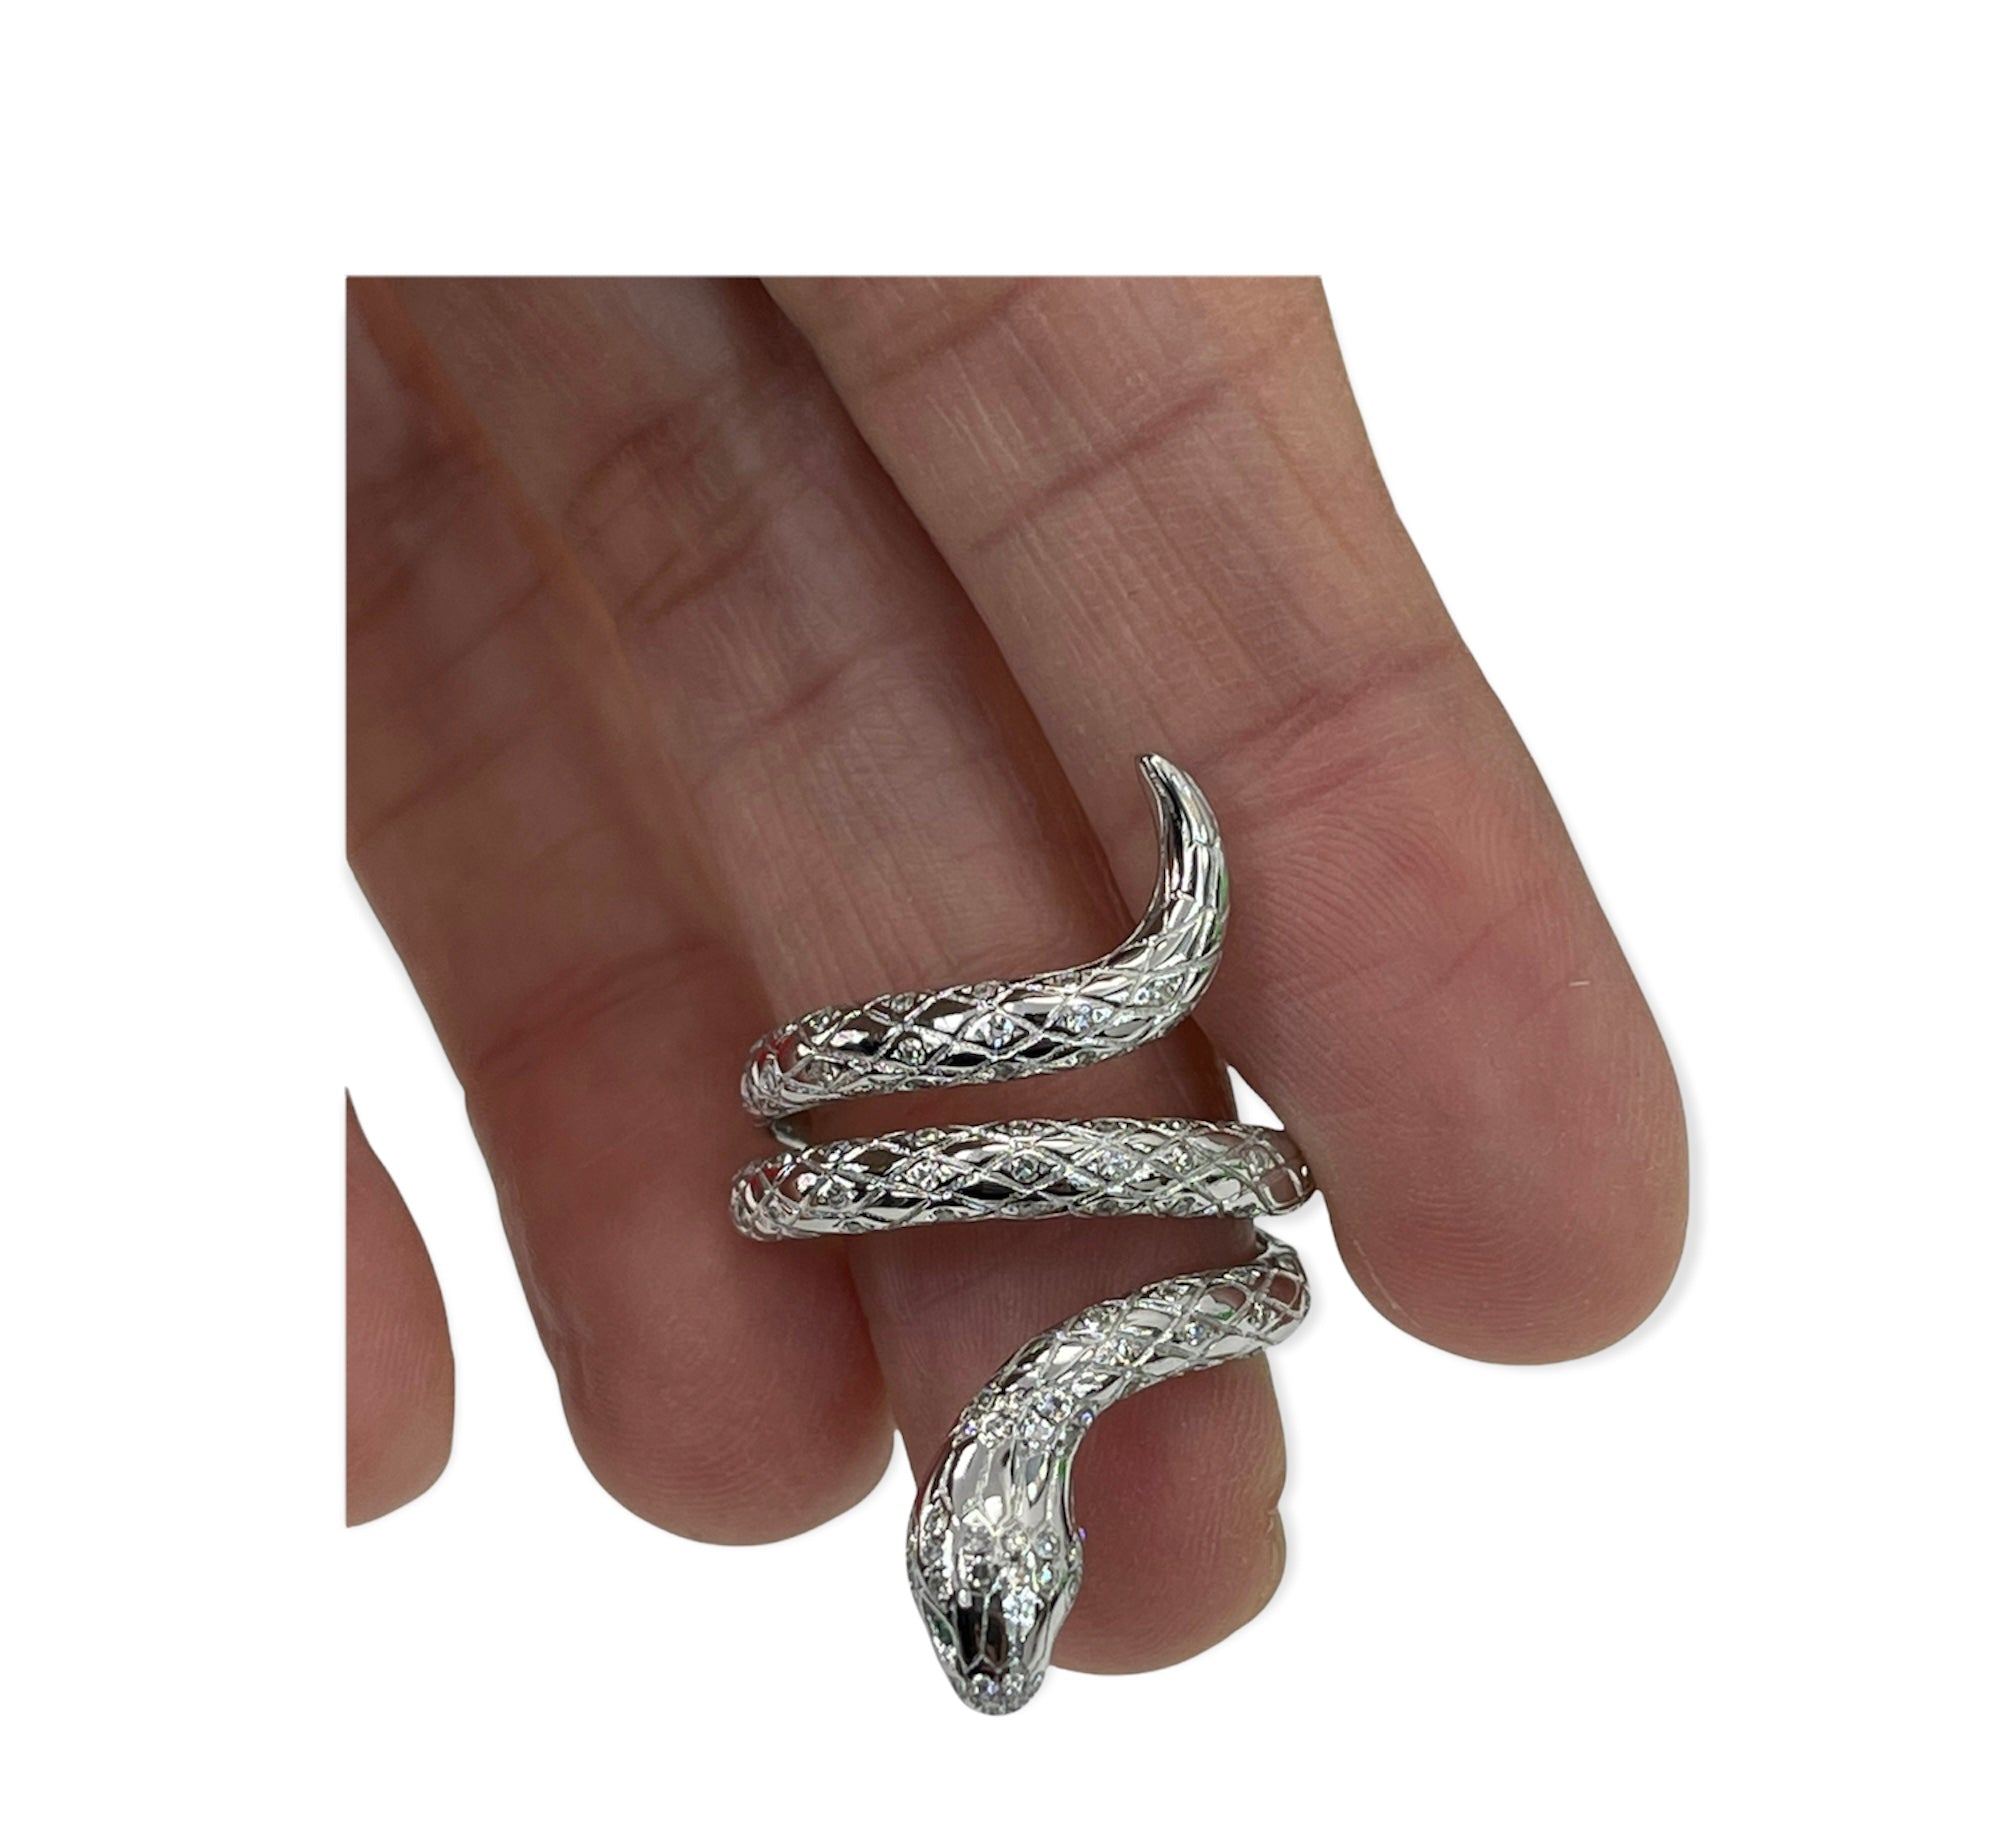 Snake Round Brilliants Diamond Ring White Gold 14kt